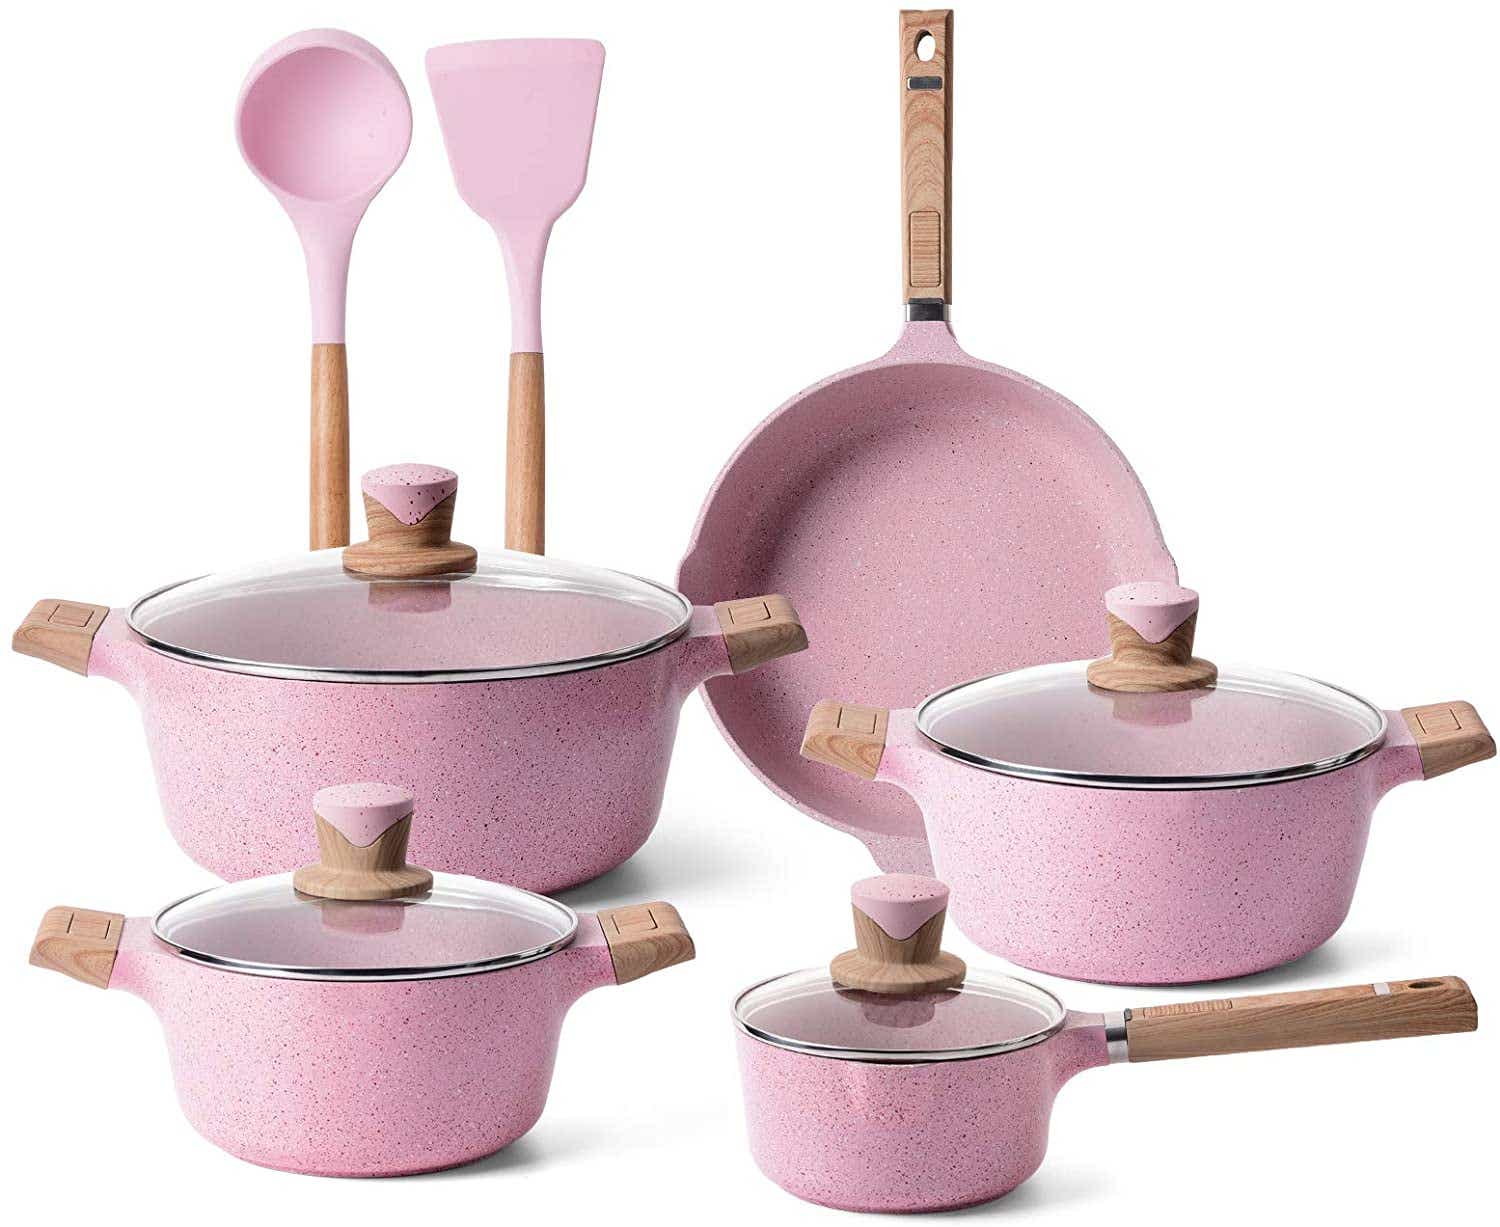 https://katiecouric.com/wp-content/uploads/2021/07/amazon-pink-cookware.jpg